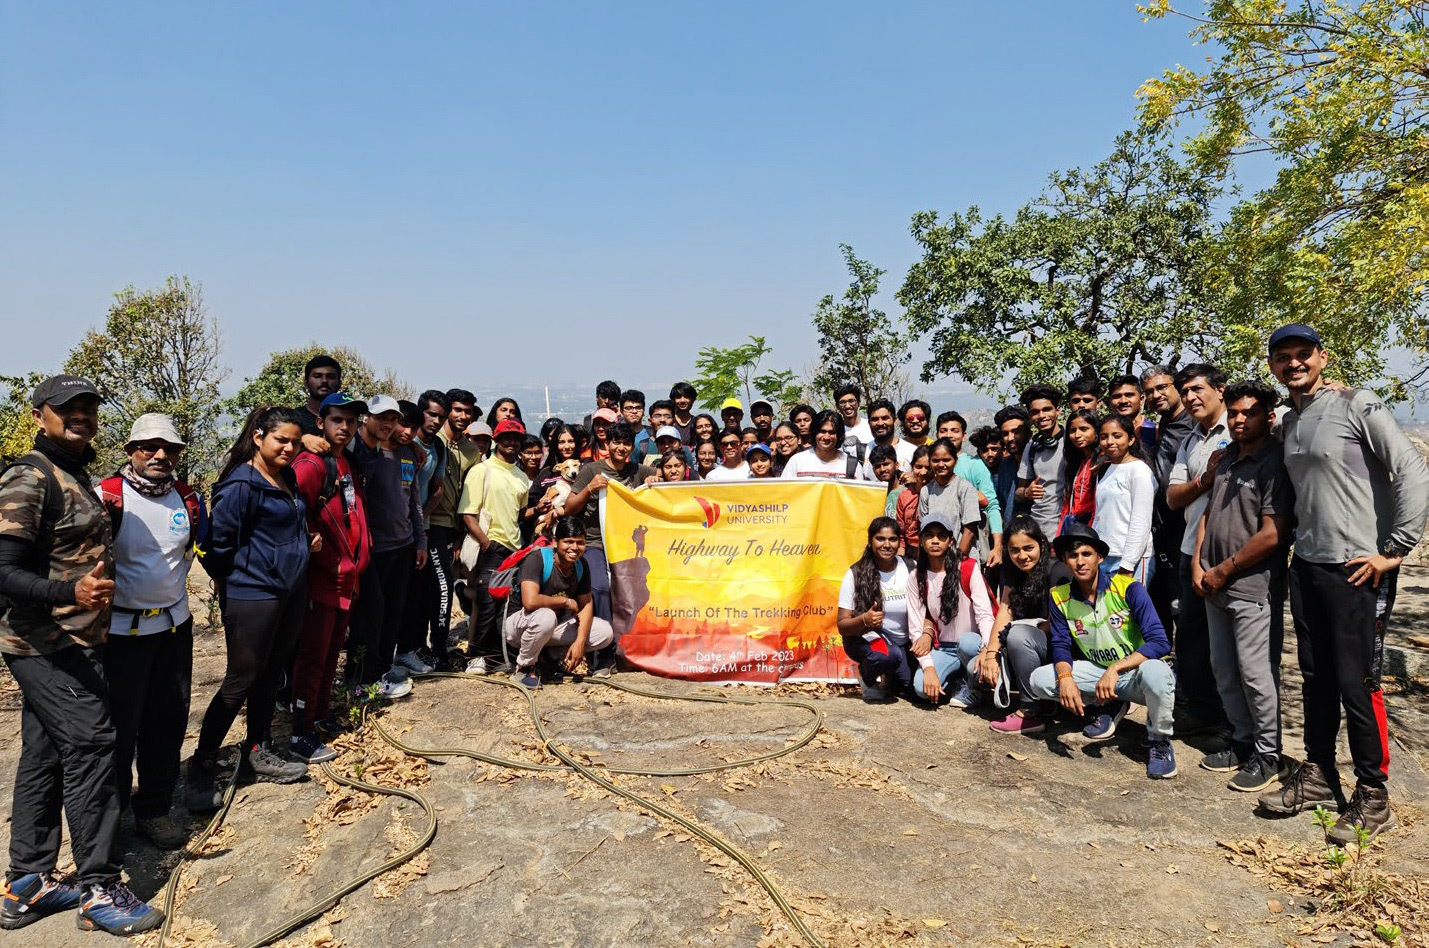  Trekking Club: Vidyashilp University